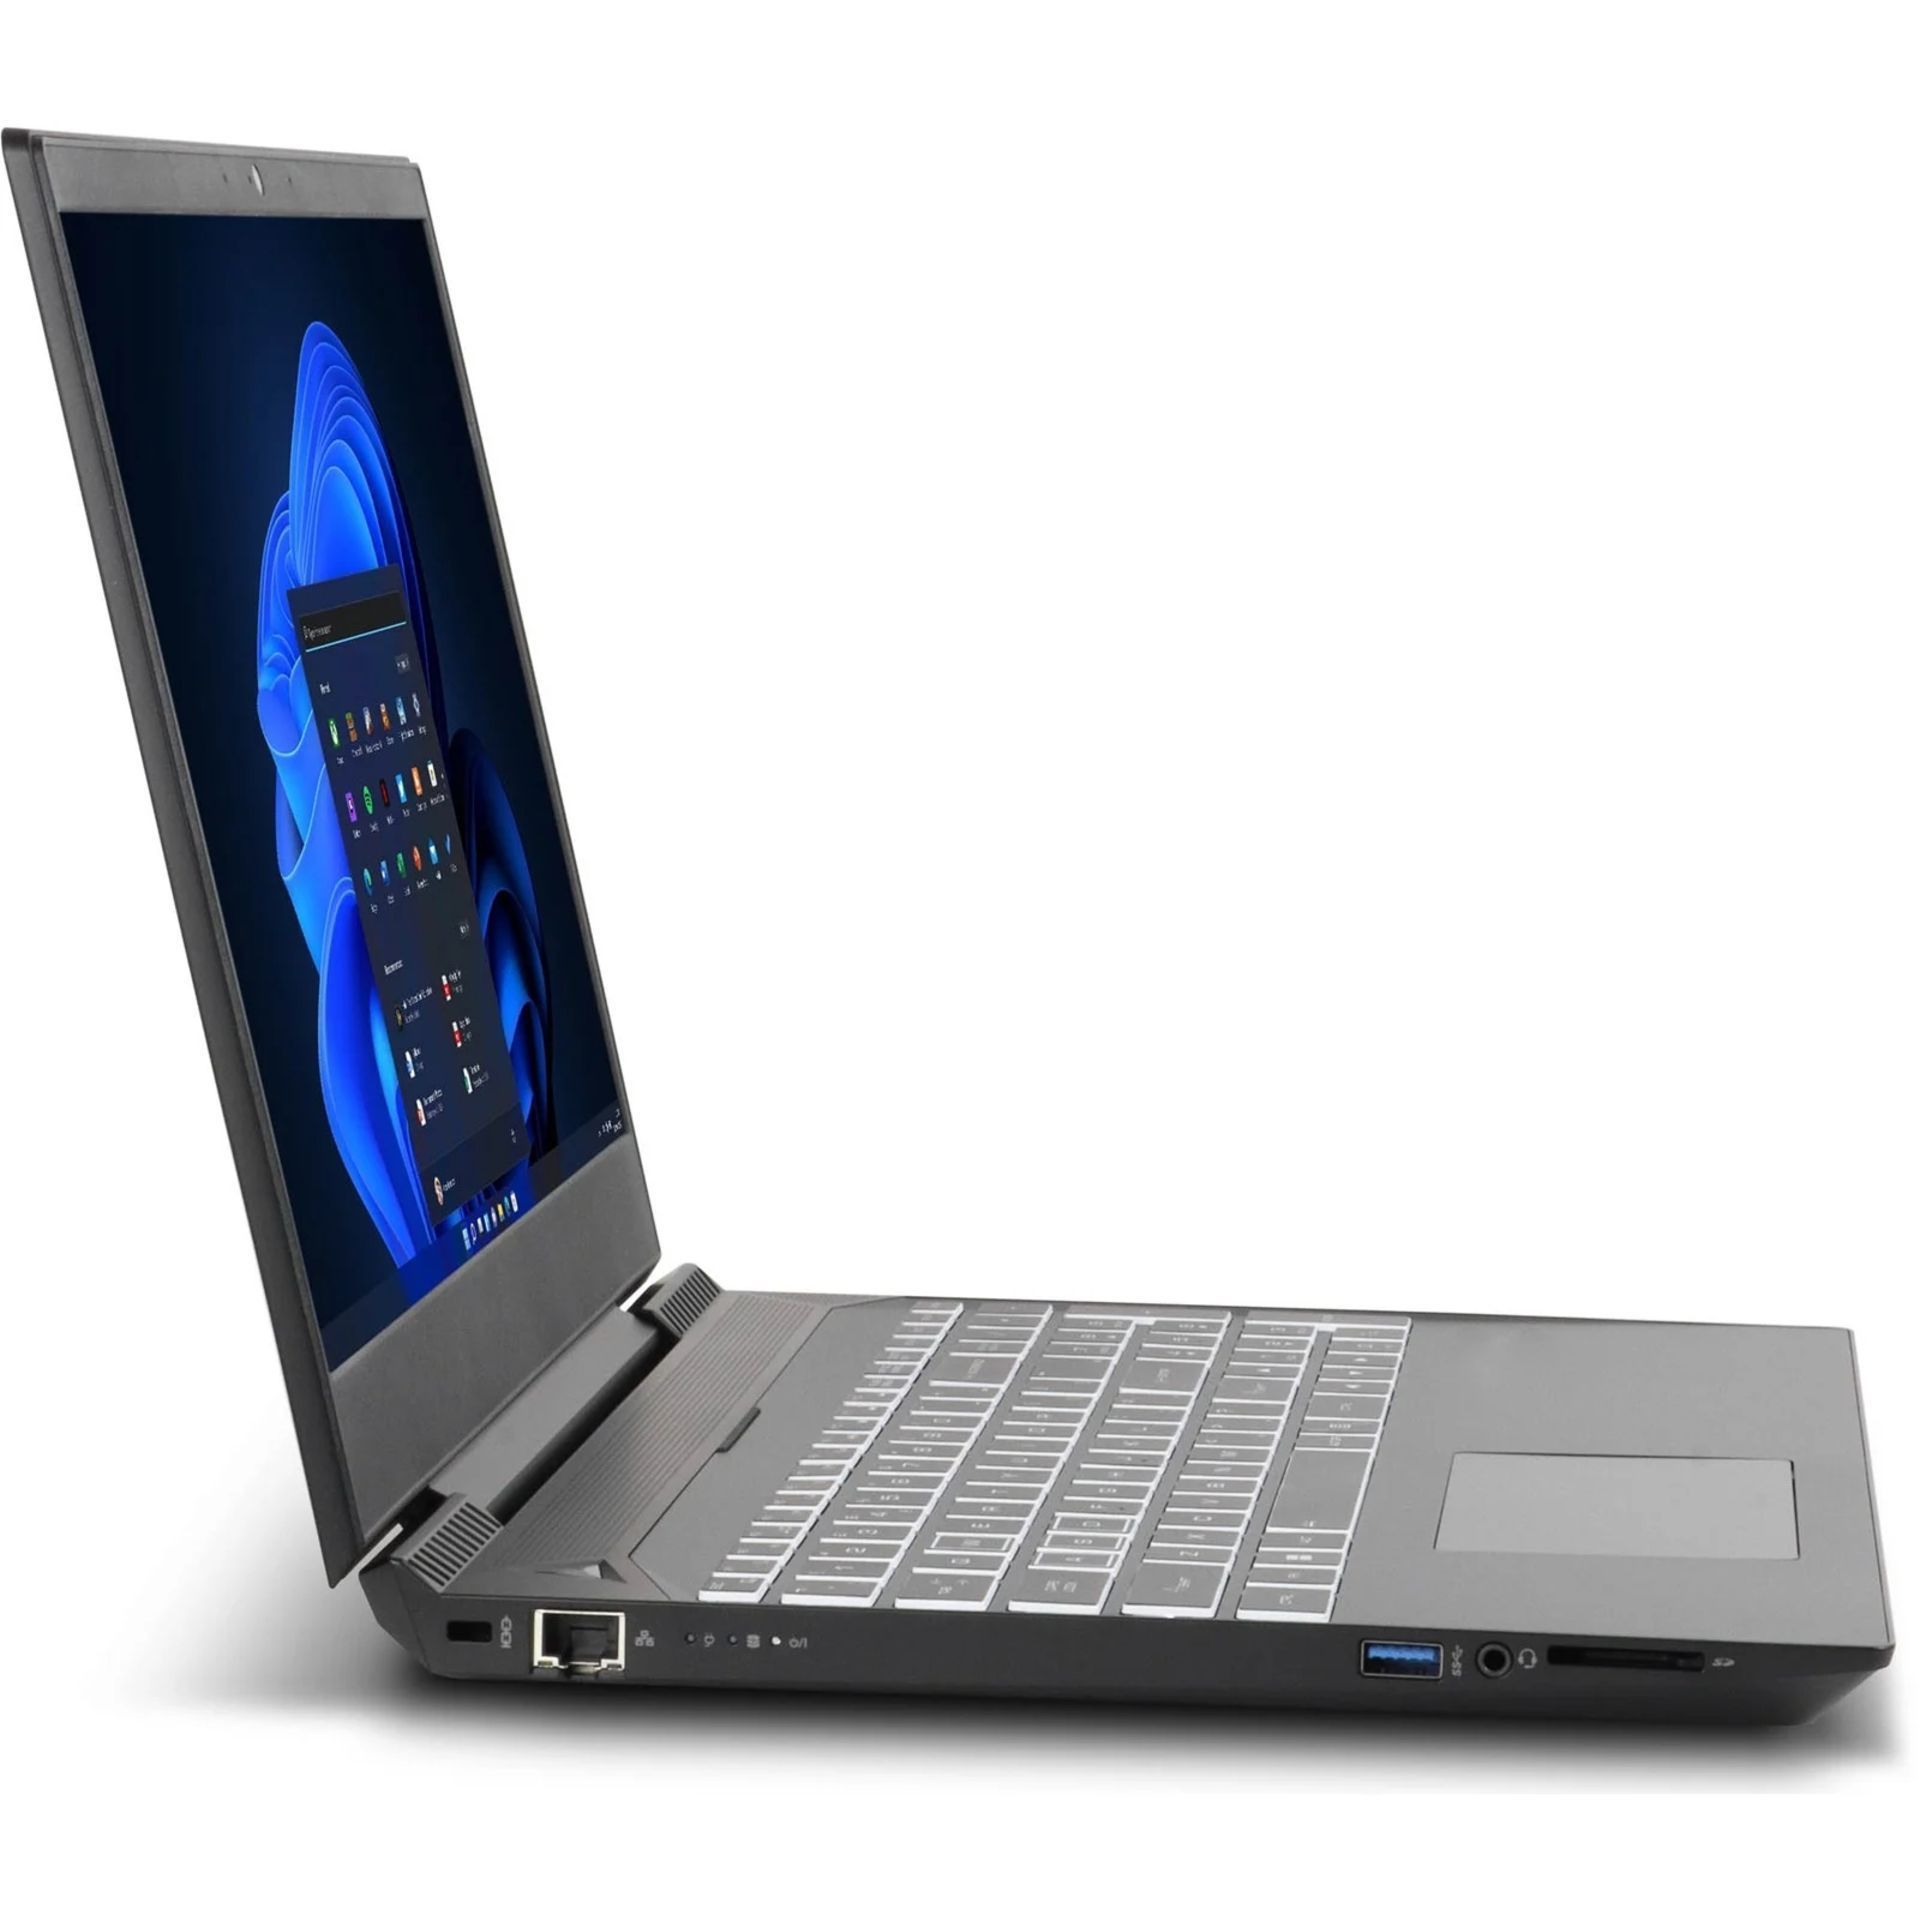 NEW & BOXED CHILLBLAST APOLLO 15.6 Inch i7 Gaming Laptop. RRP £895. Intel Core i7-12700H 14-core - Image 3 of 8